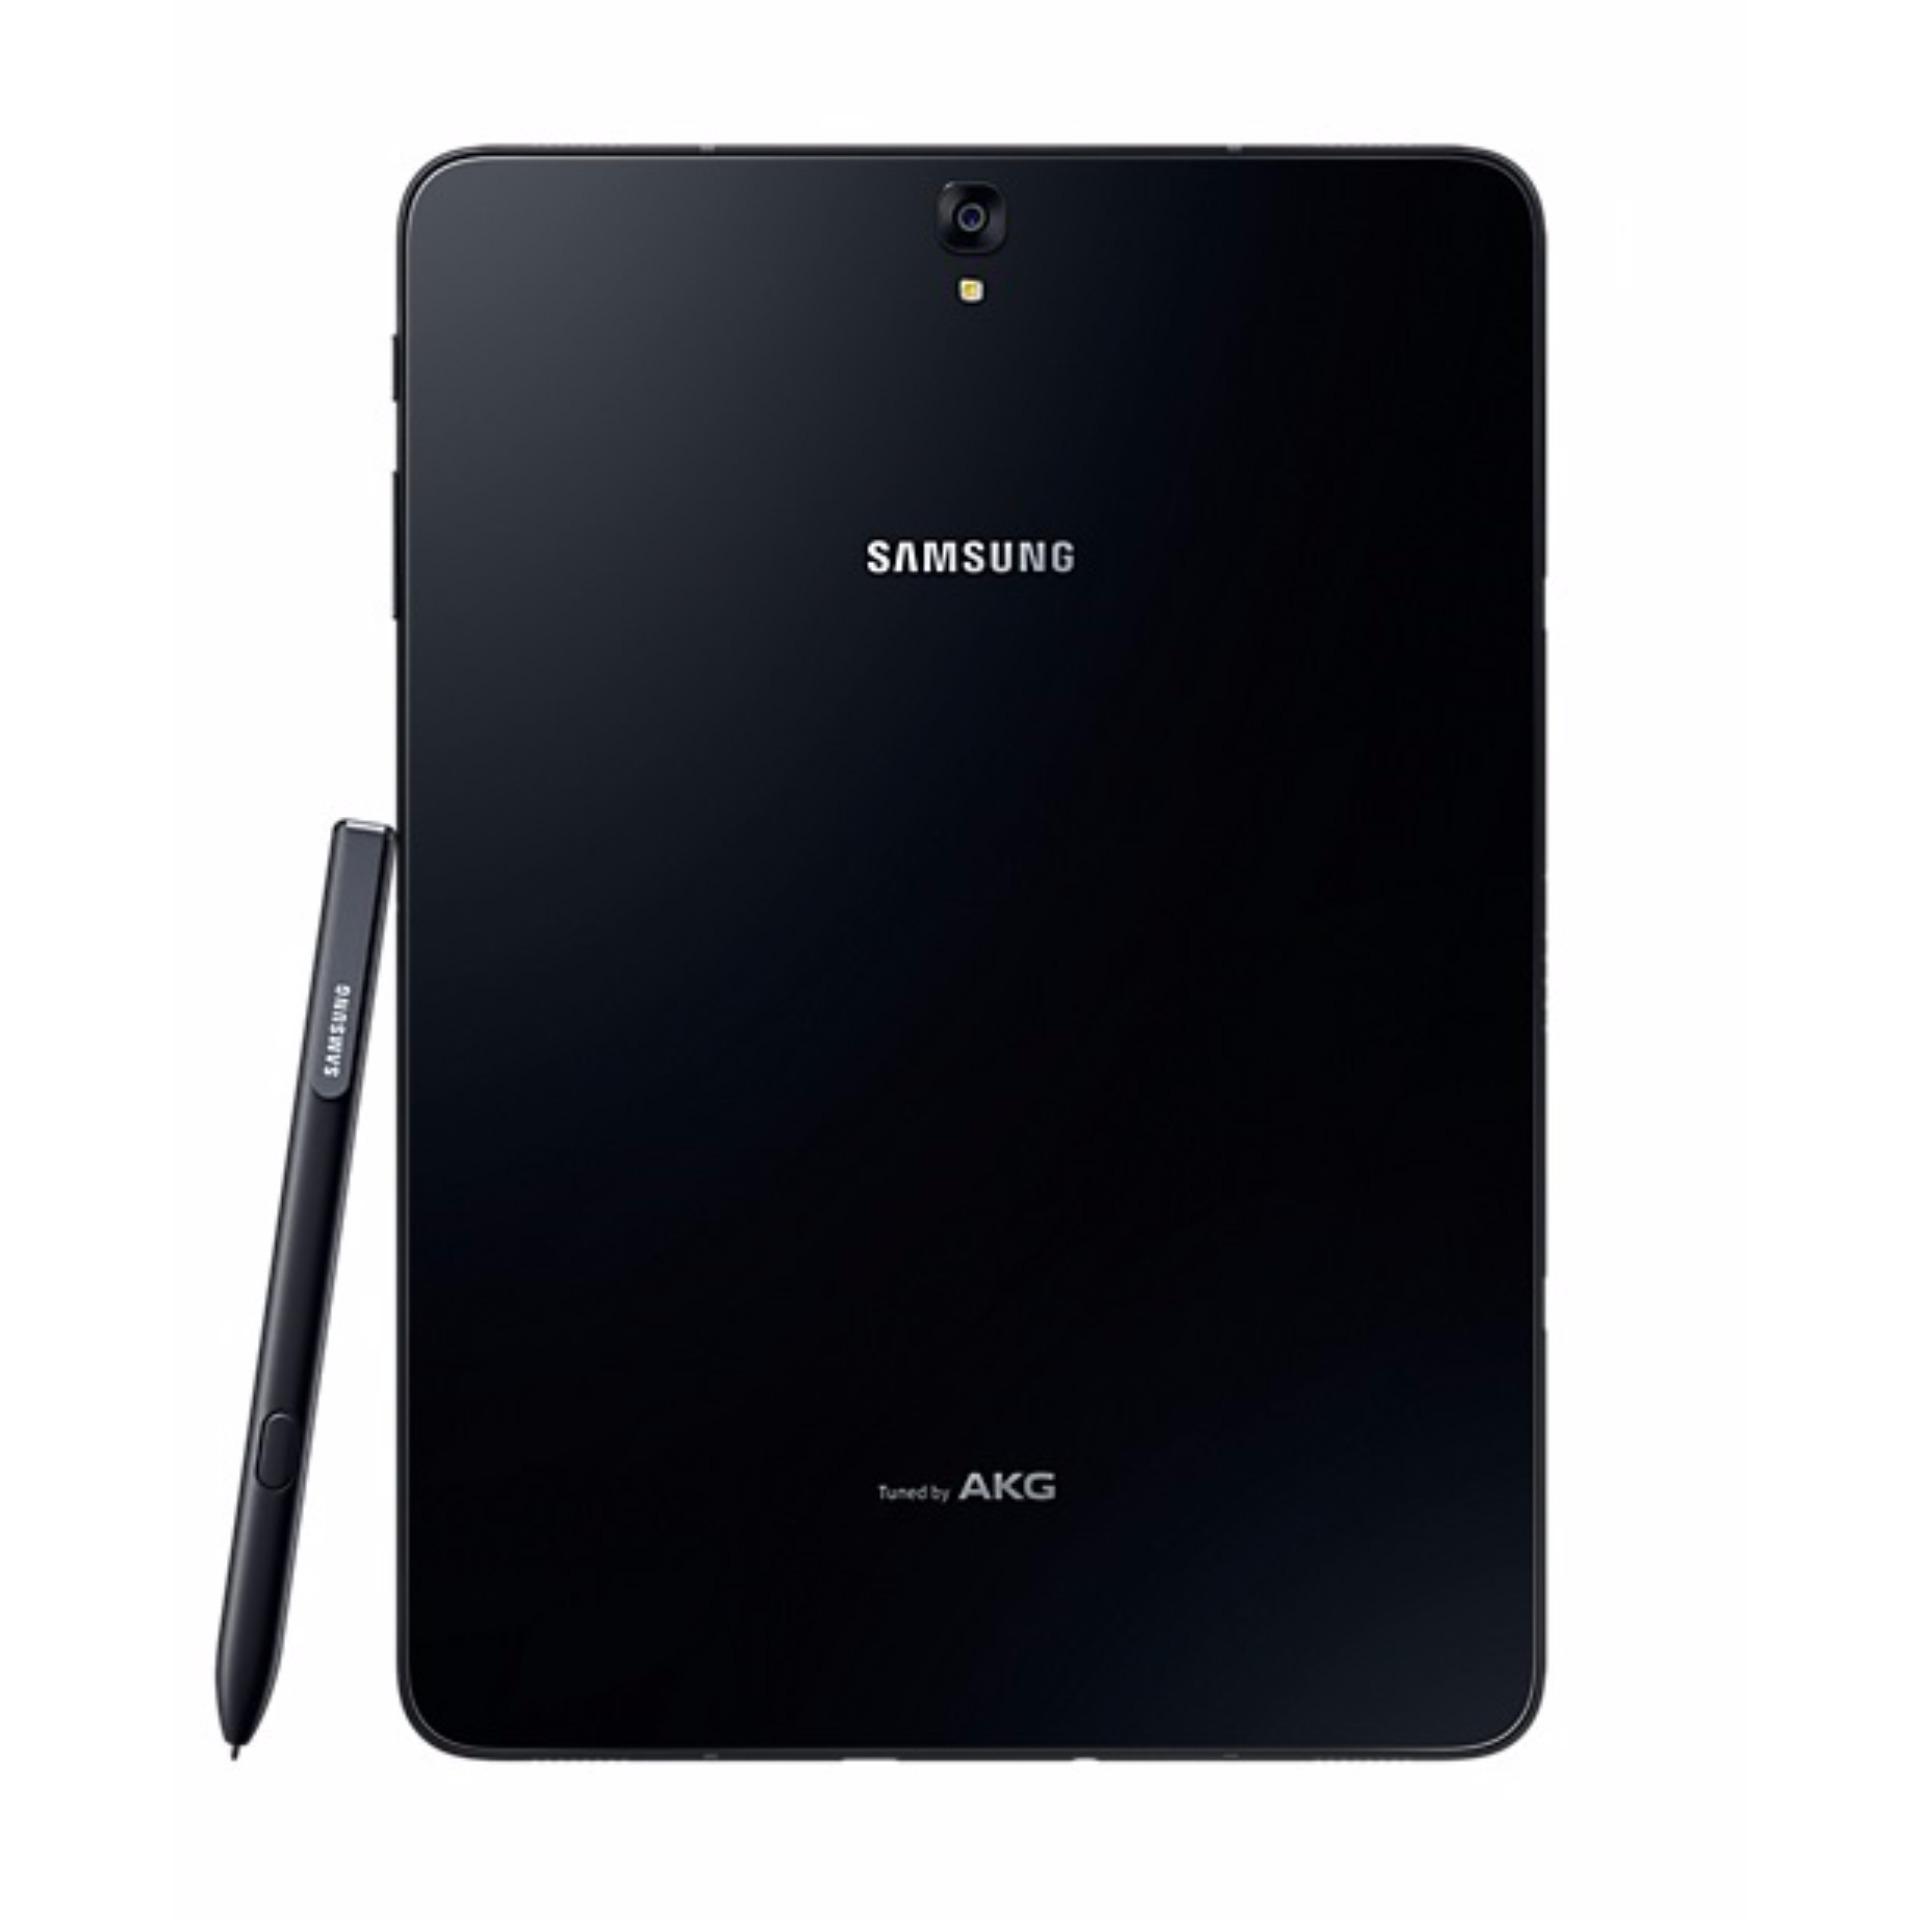 [NEW] Samsung Galaxy Tab S3 WIFI 9.7